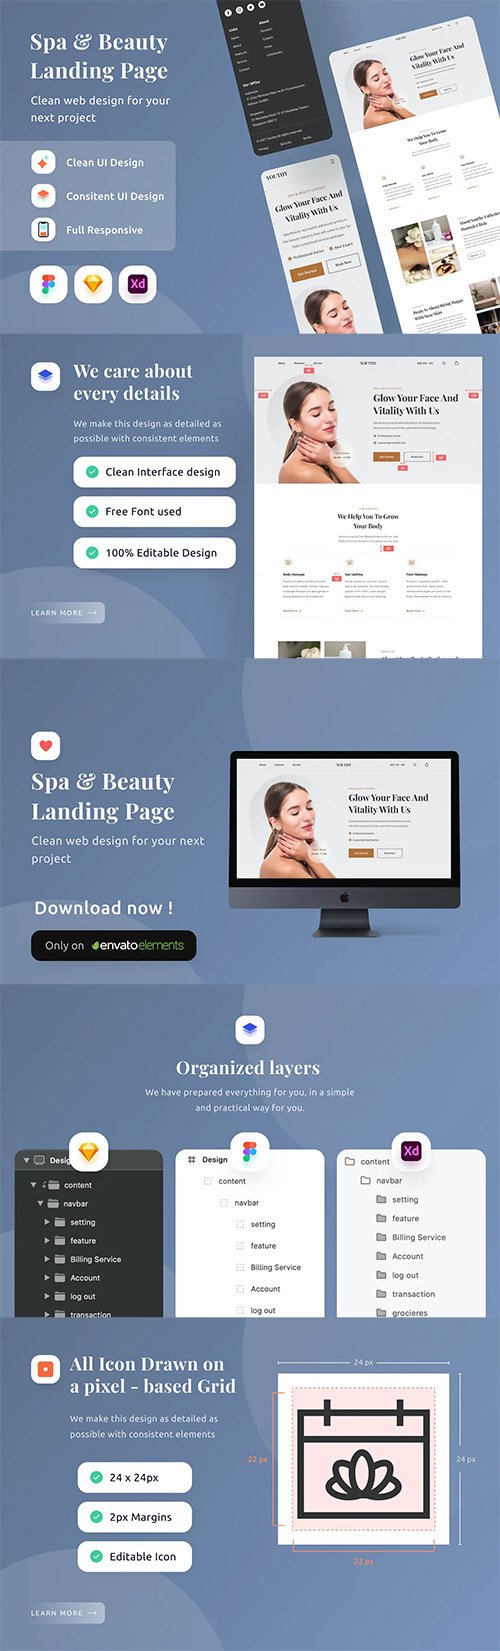 Spa & Beauty Landing Page